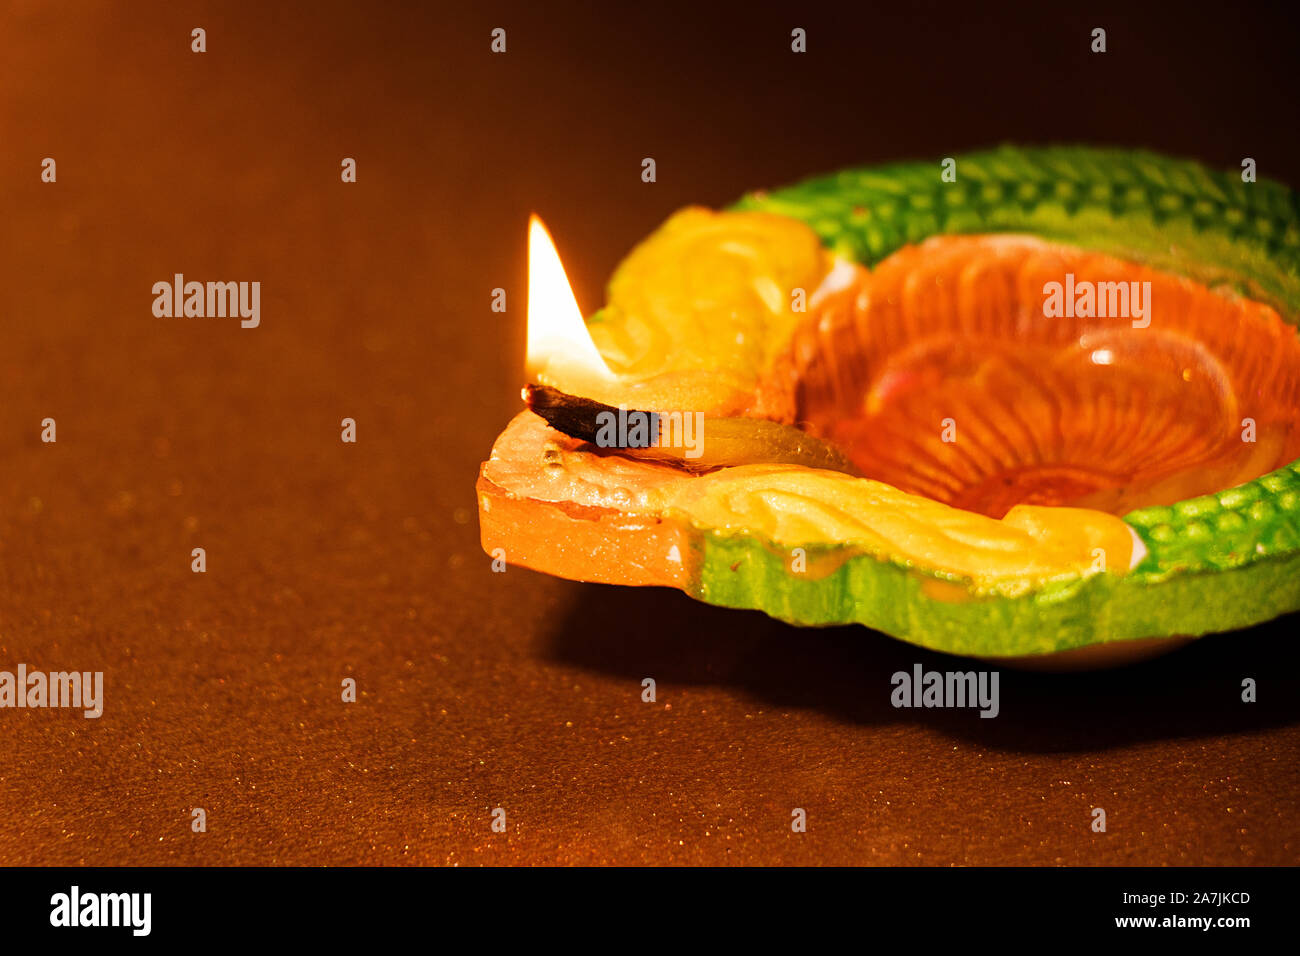 Close-up Burning Clay Diya oil-lamp Lighting During Diwali Festival Celebration In-India Stock Photo